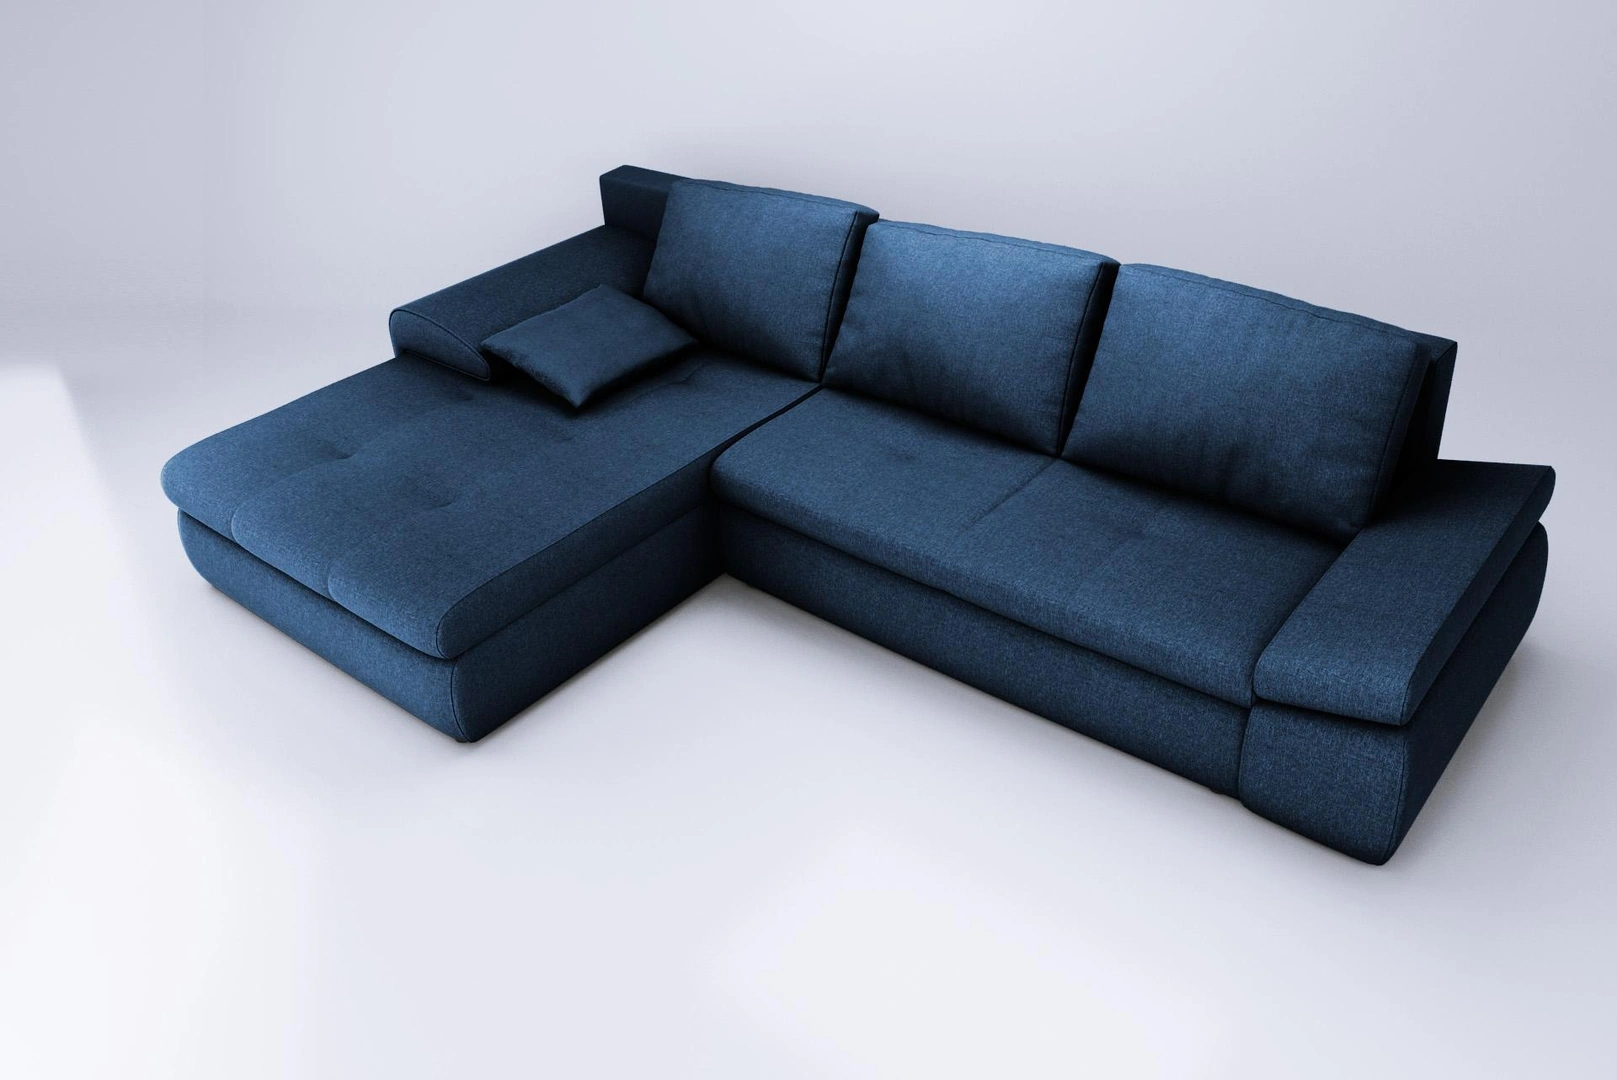 Bono Corner Sofa Bed Universal Dark Blue Vogue 13